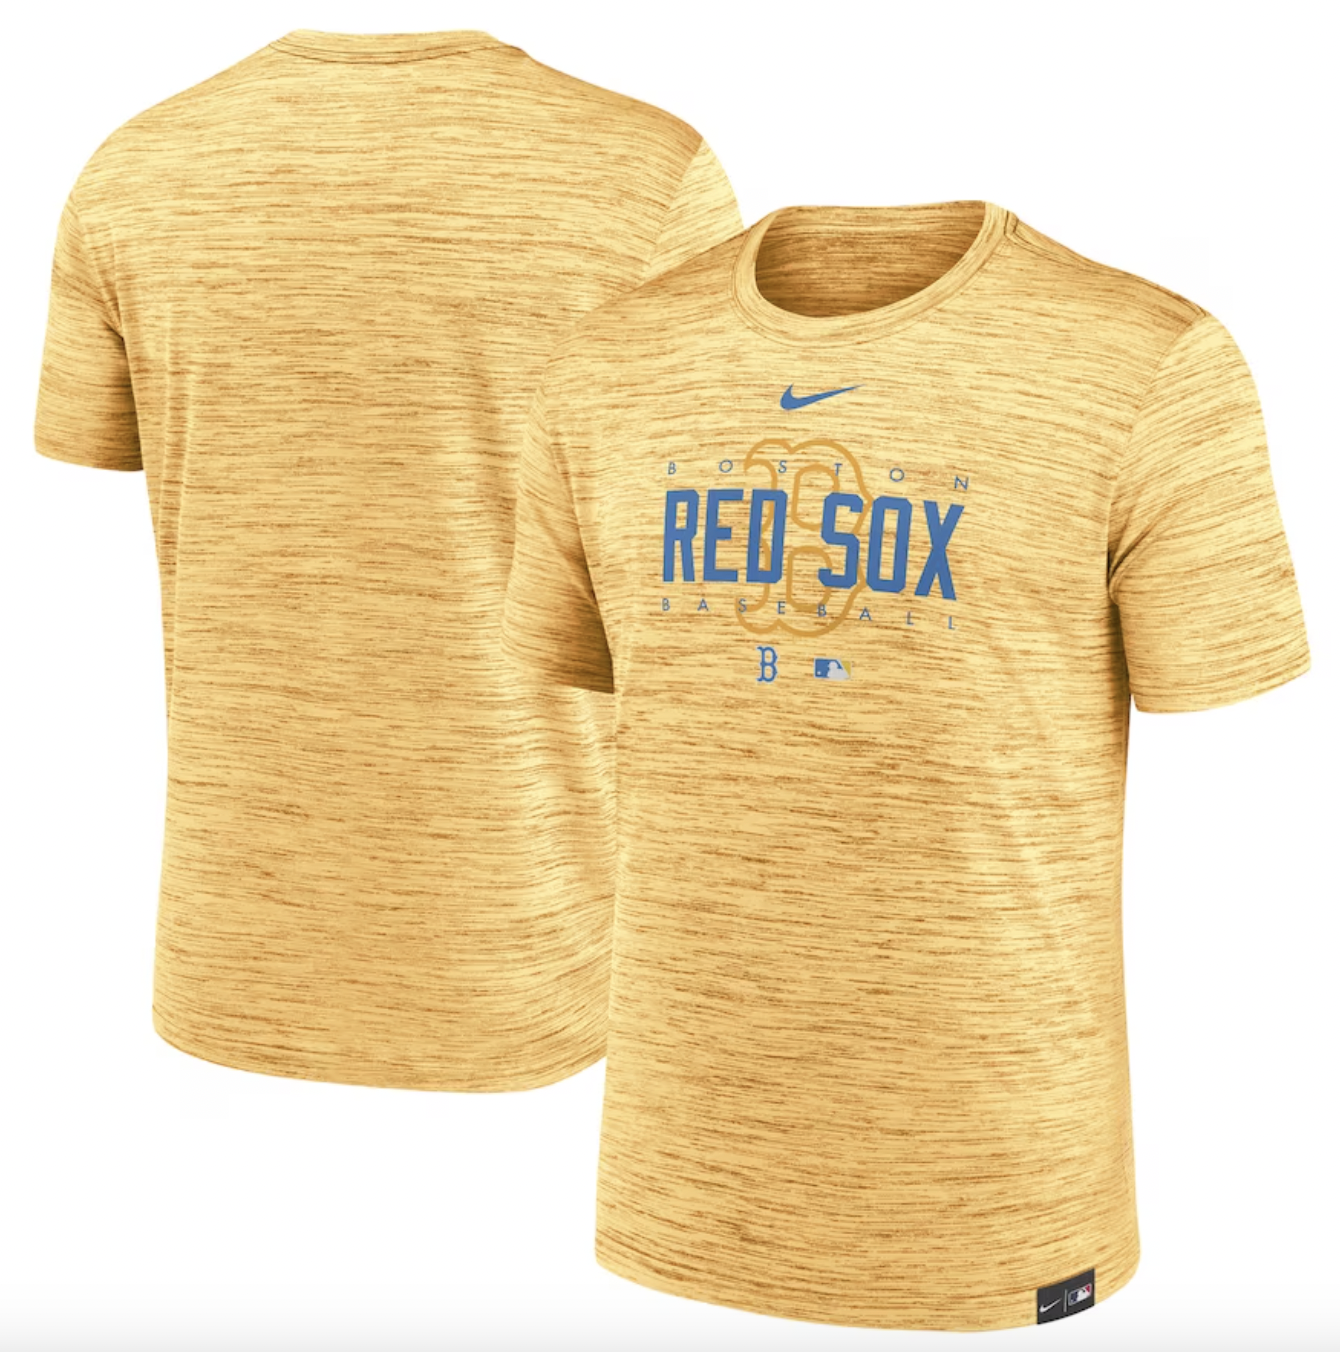 Men's Boston Red Sox Alex Verdugo Nike White Replica Player Jersey